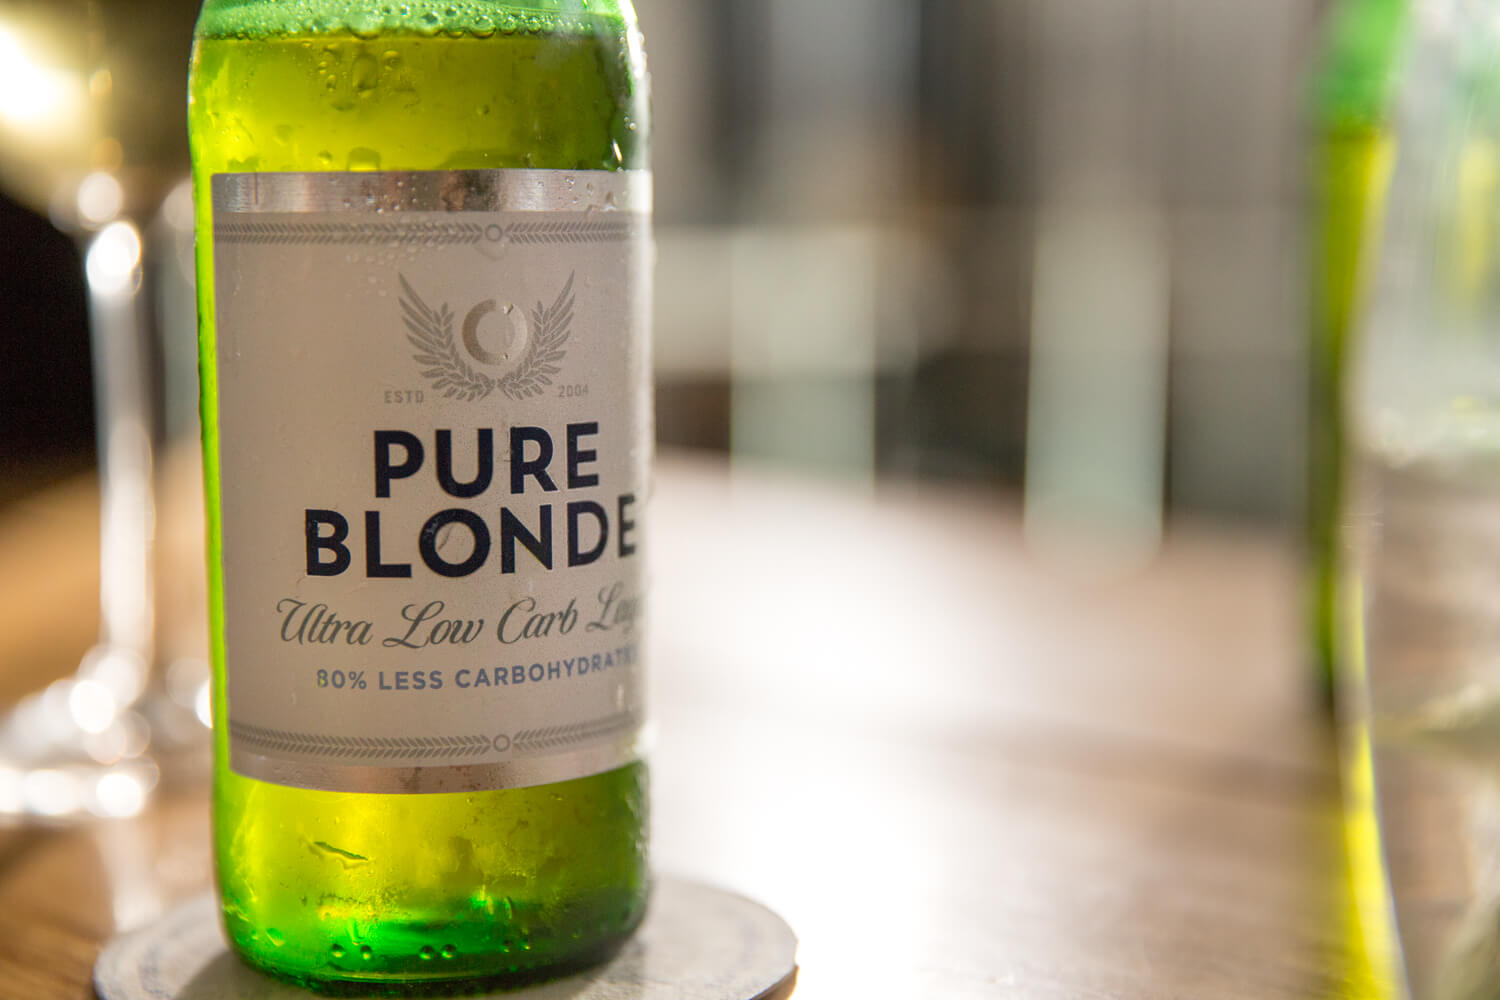 Pure Blonde Carlton And United Breweries Cub